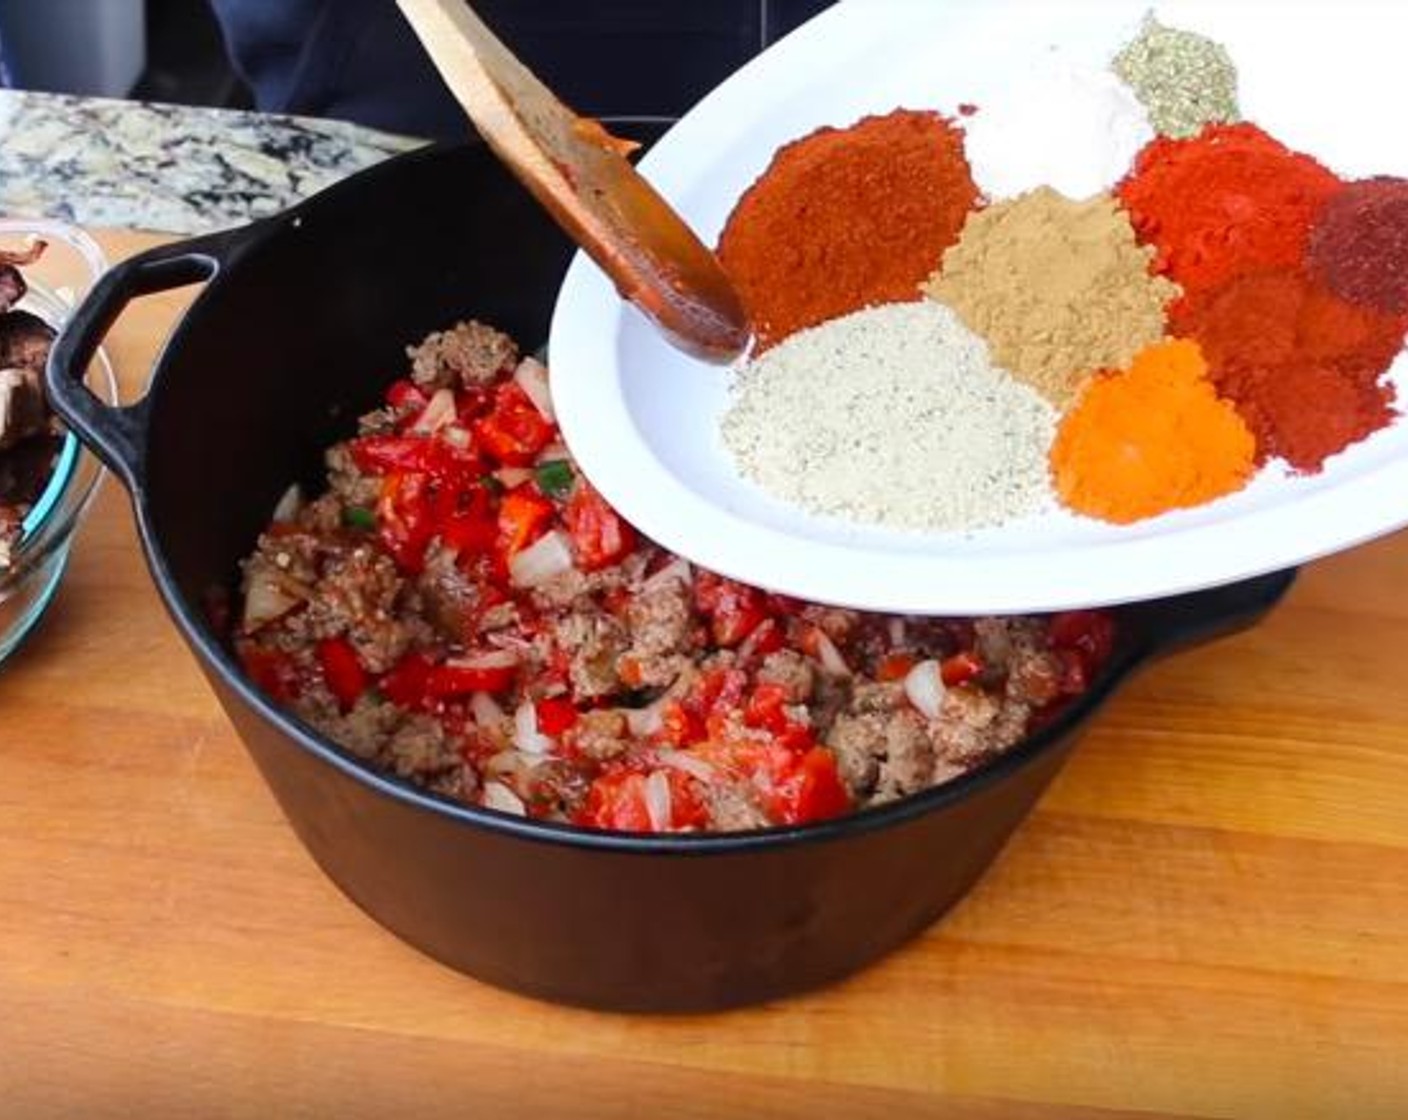 step 5 To make the Chili Seasoning, combine Granulated Sugar (1/3 cup), All-Purpose Spice Rub (2 Tbsp), Chili Powder (2 Tbsp), Ground Cumin (1 Tbsp), Onion Powder (1 Tbsp), Paprika (1/2 Tbsp), Chipotle Chili Powder (1 tsp), Ancho Chili Powder (1 tsp), Fresh Oregano (1 tsp) and Cayenne Pepper (1/4 tsp).